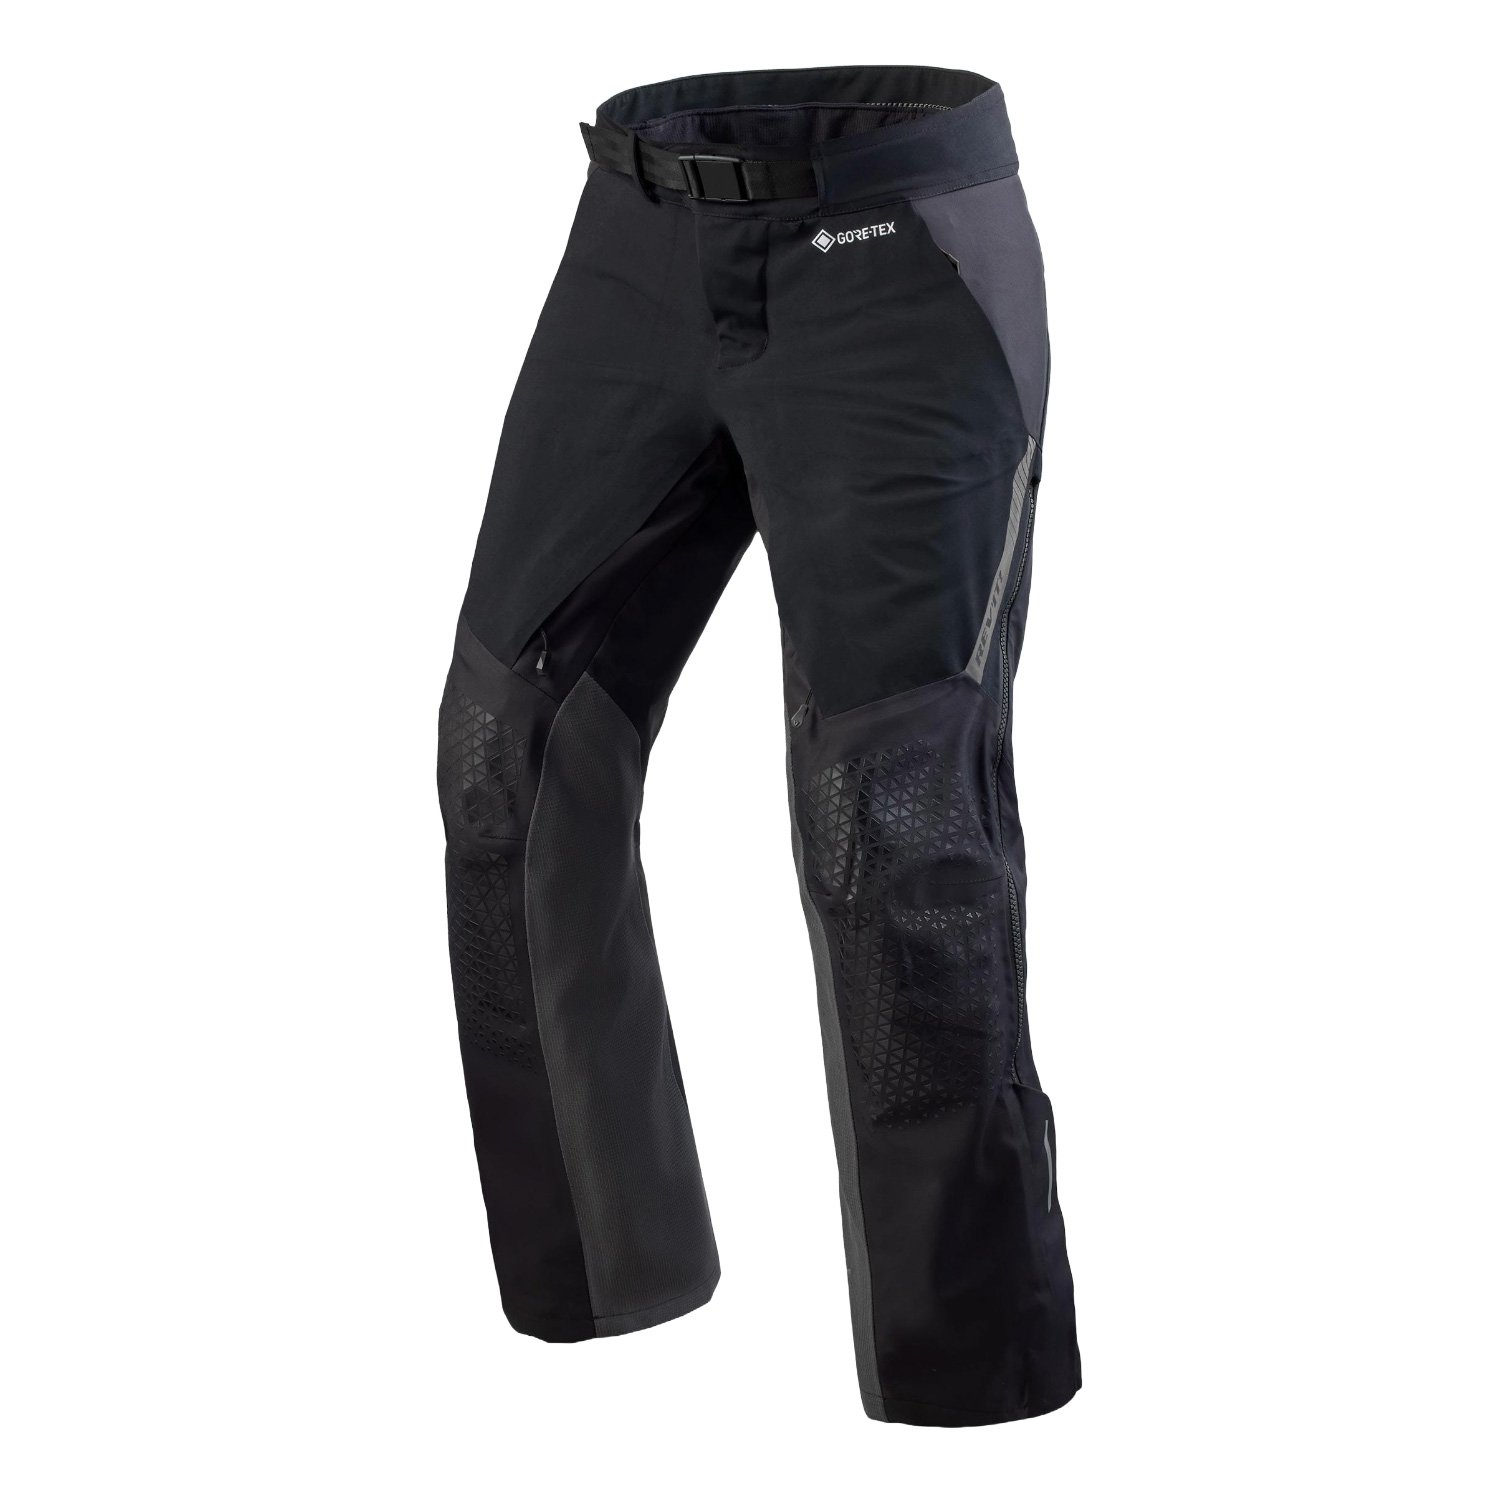 Image of REV'IT! Stratum GTX Black Grey Standard Motorcycle Pants Size S ID 8700001351126